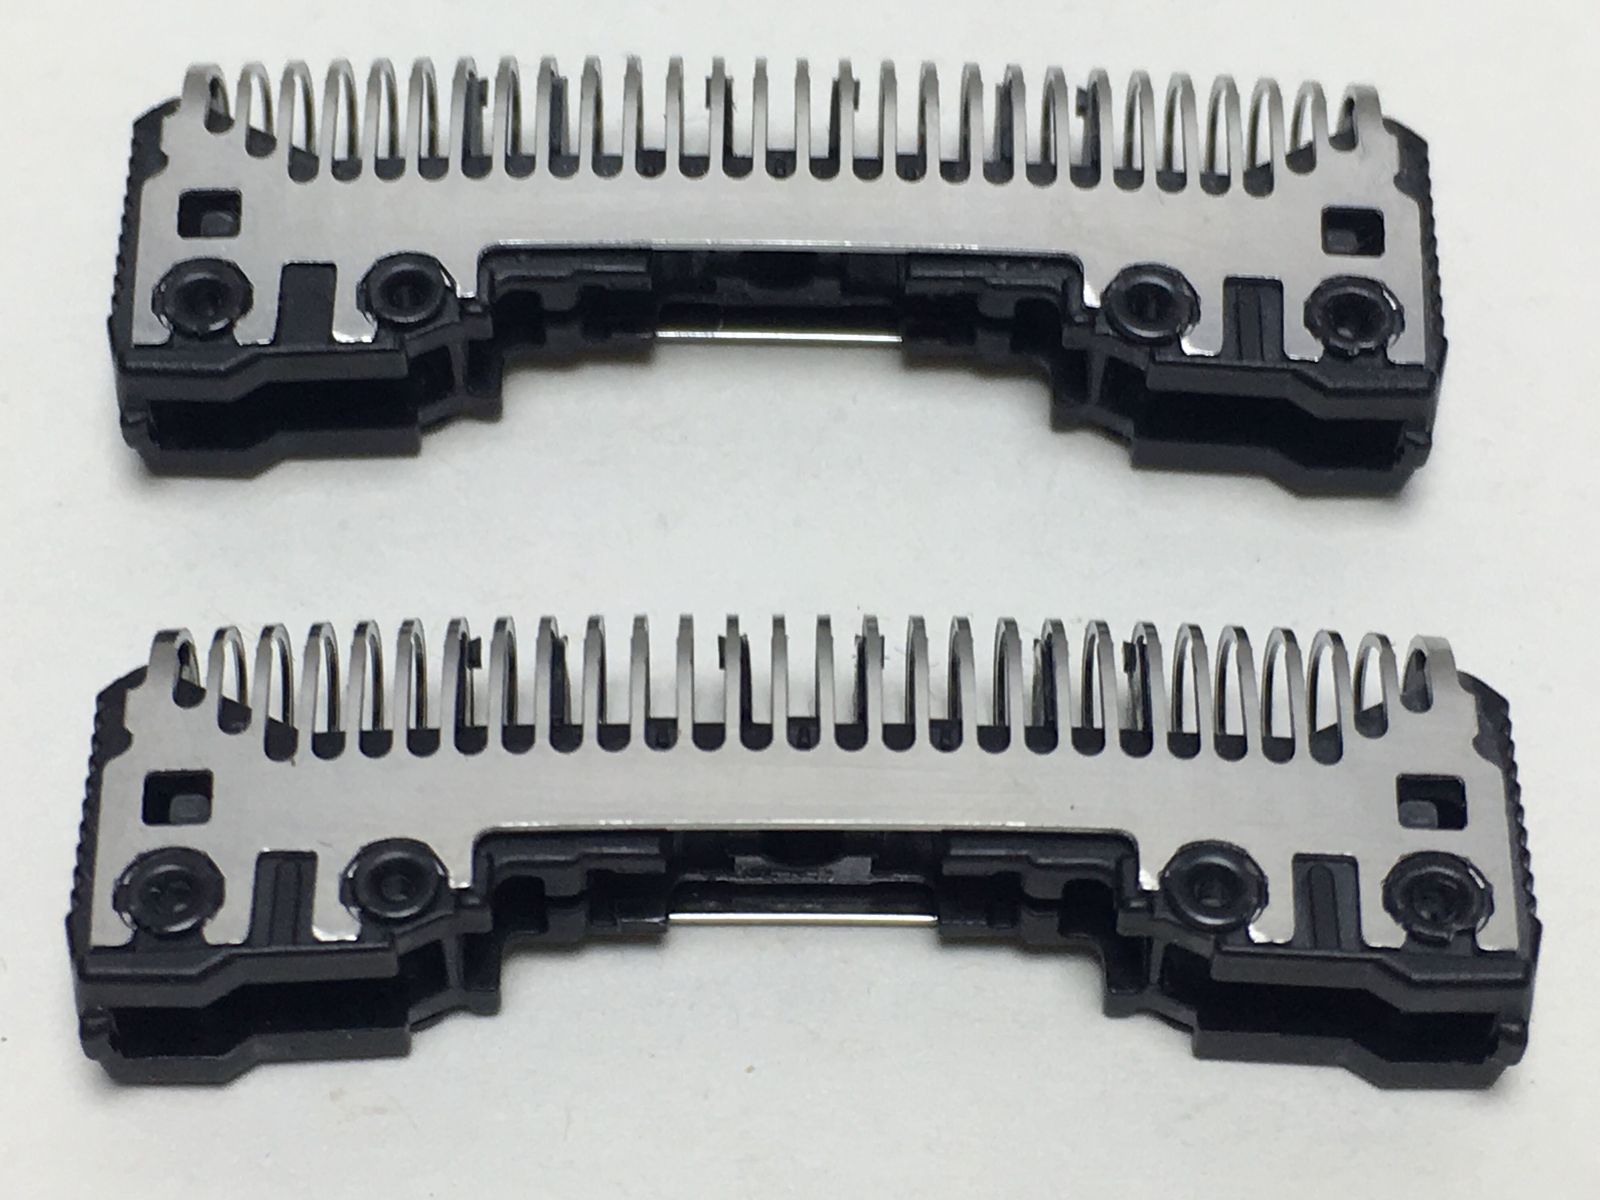 2x razor blades cutter for panasonic es8237 es8238 es8243 es8249 es8251 shaver